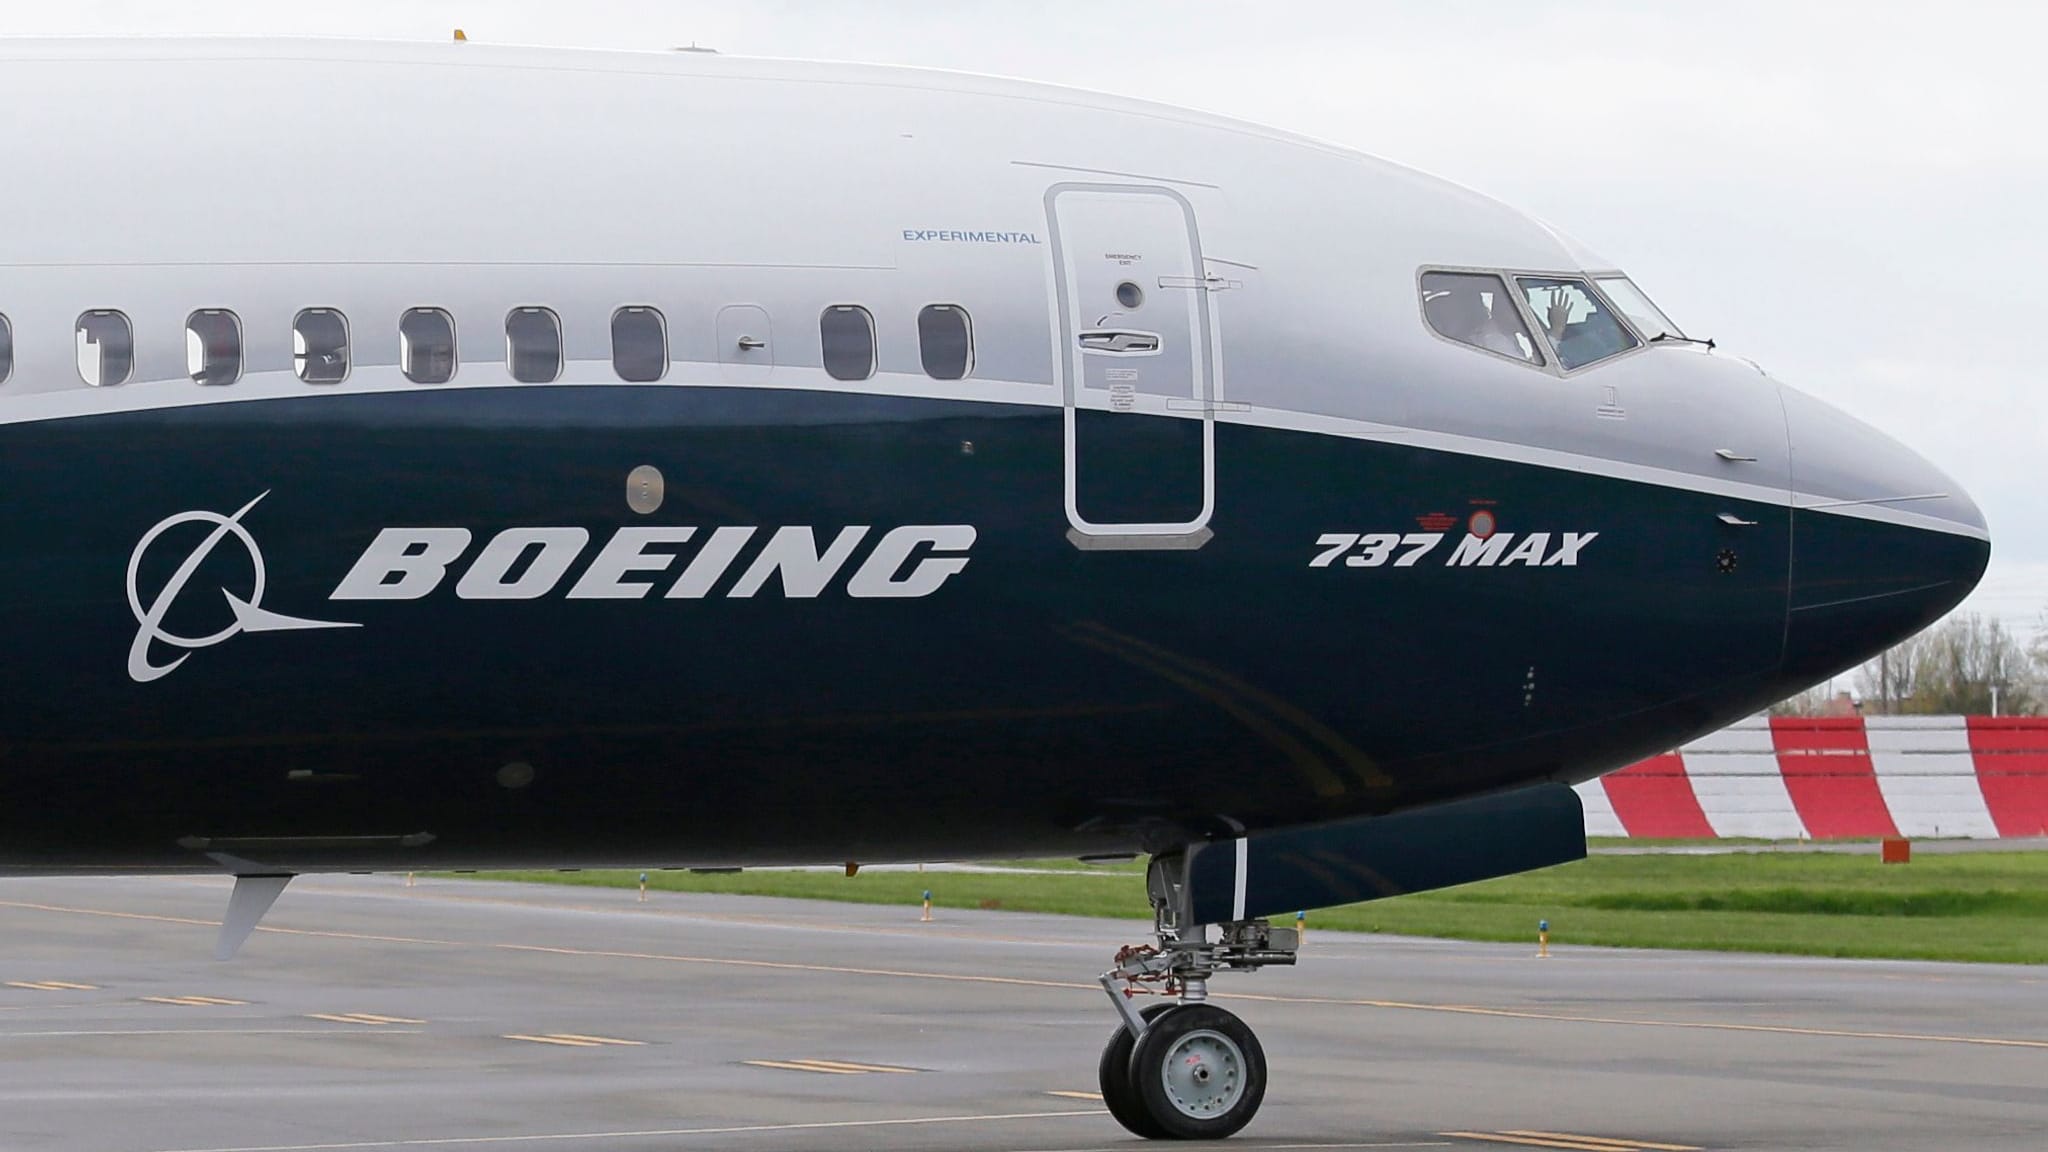 Boeing: Topmanager muss nach dramatischem Fall bei Alaska Airlines gehen